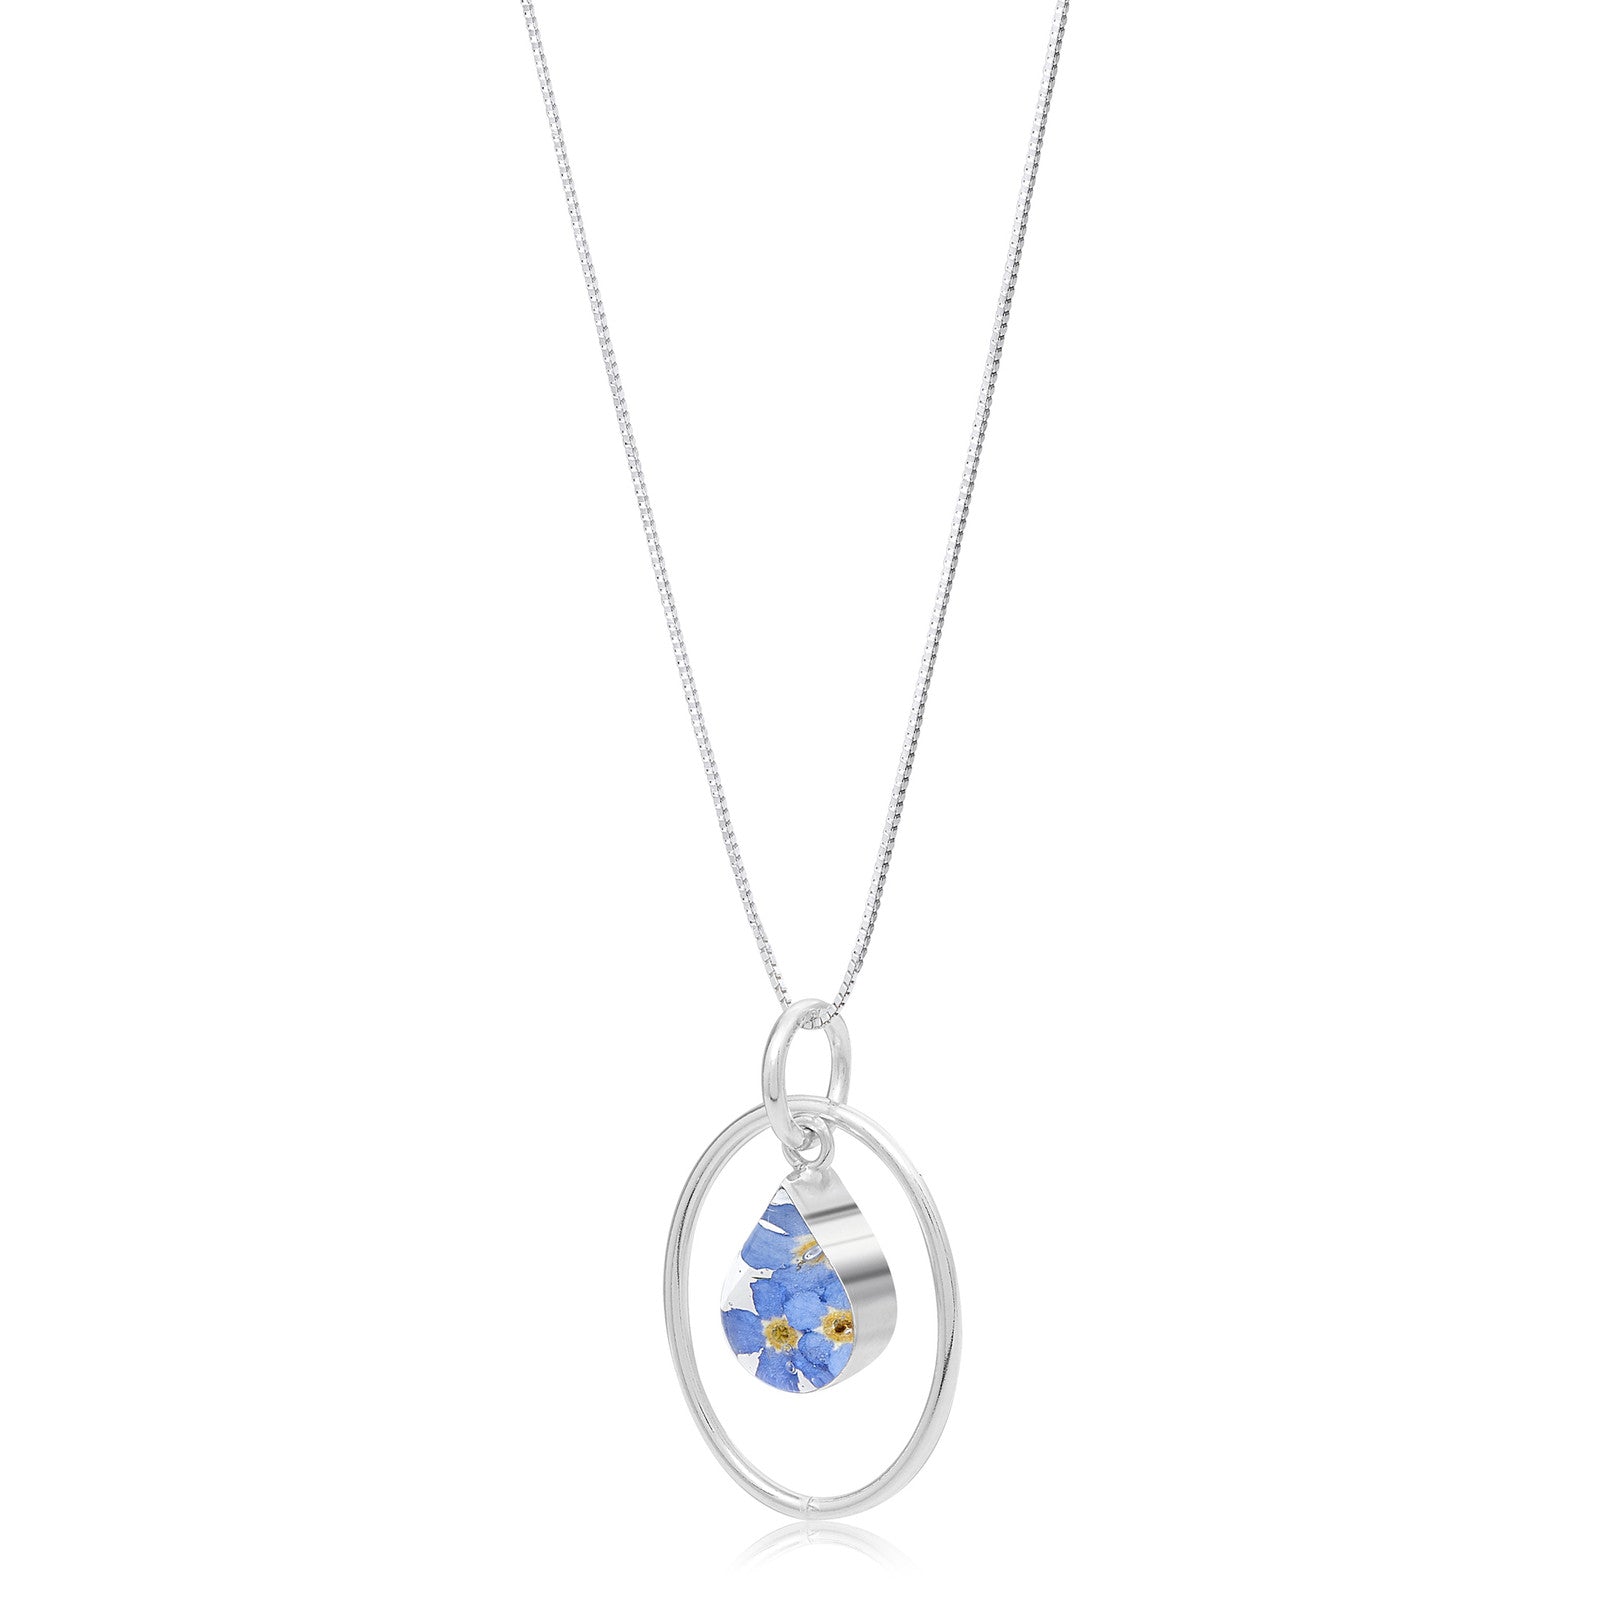 Forget-me-not necklace with sterling silver teardrop pendant FJ2, FJ30, FJ31